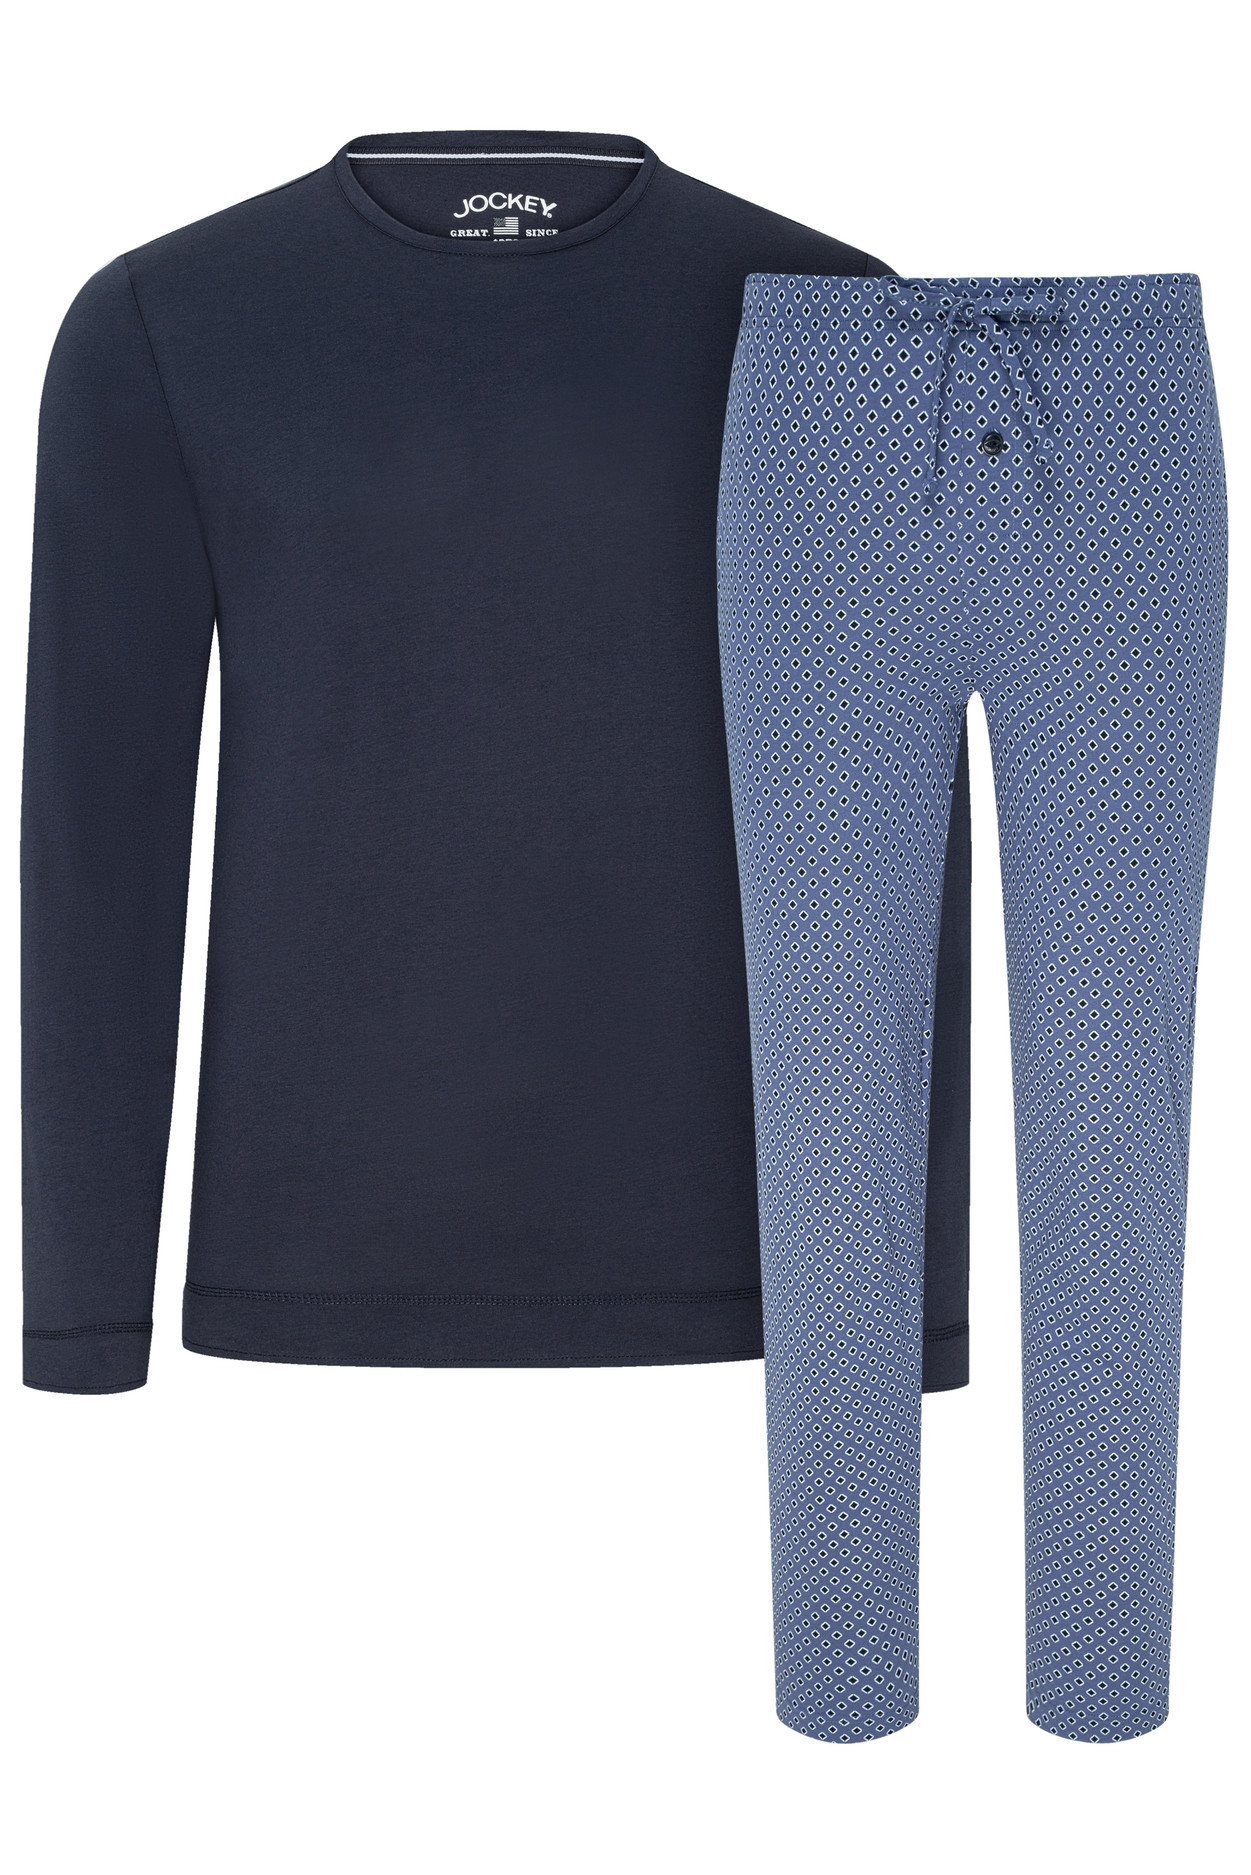 Pánské pyžamo 500002-407 - Jockey M tmavě modrá